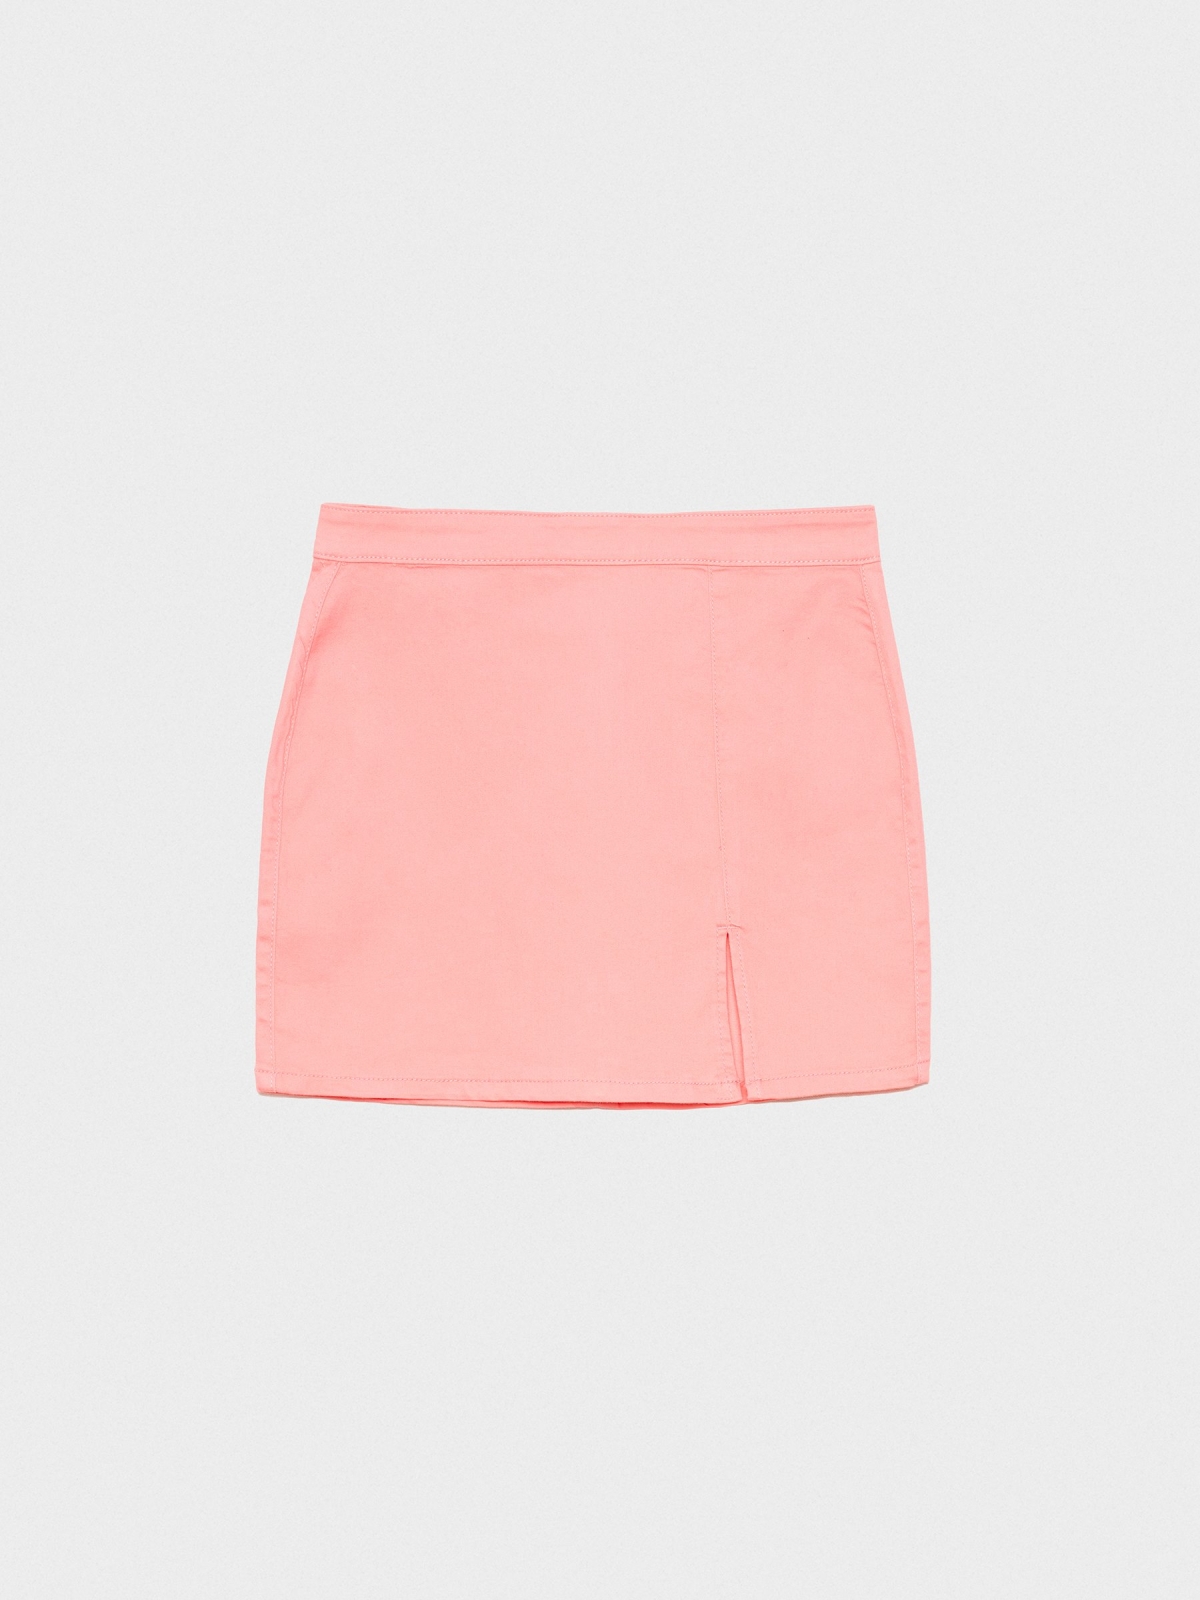  Mini saia fina com fenda rosa claro